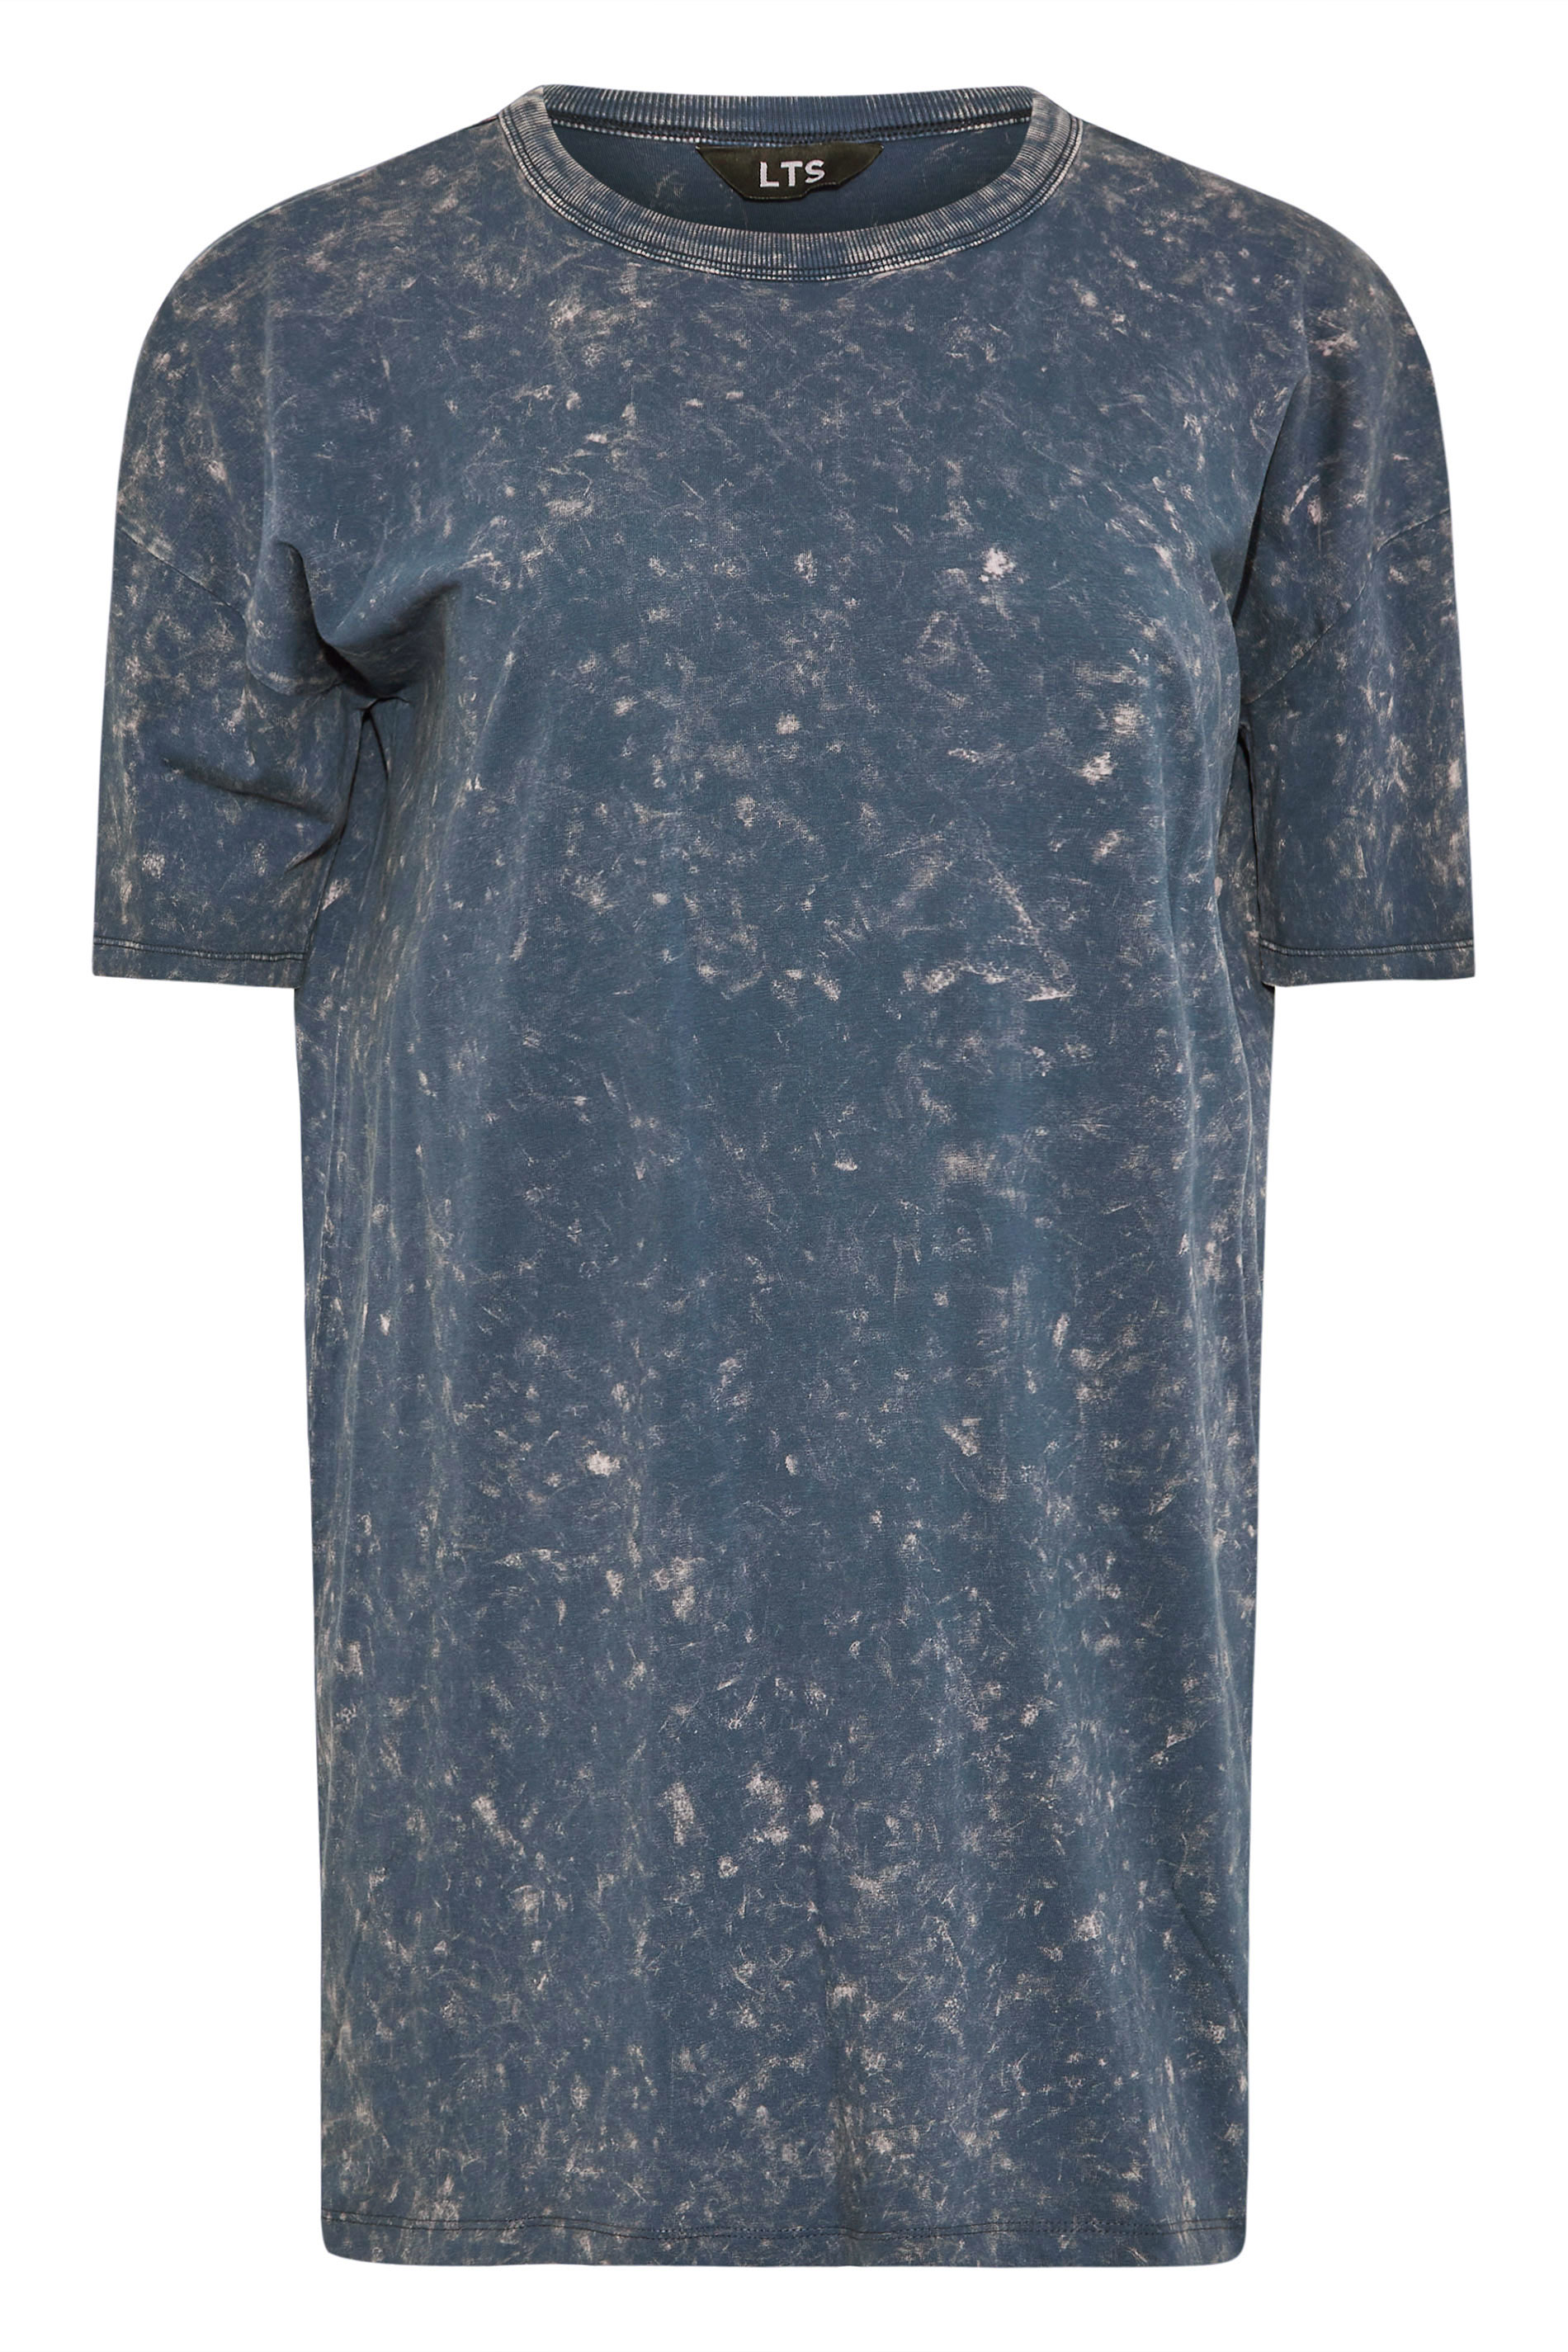 LTS Tall Women's Navy Blue Acid Wash Oversized T-Shirt | Long Tall Sally